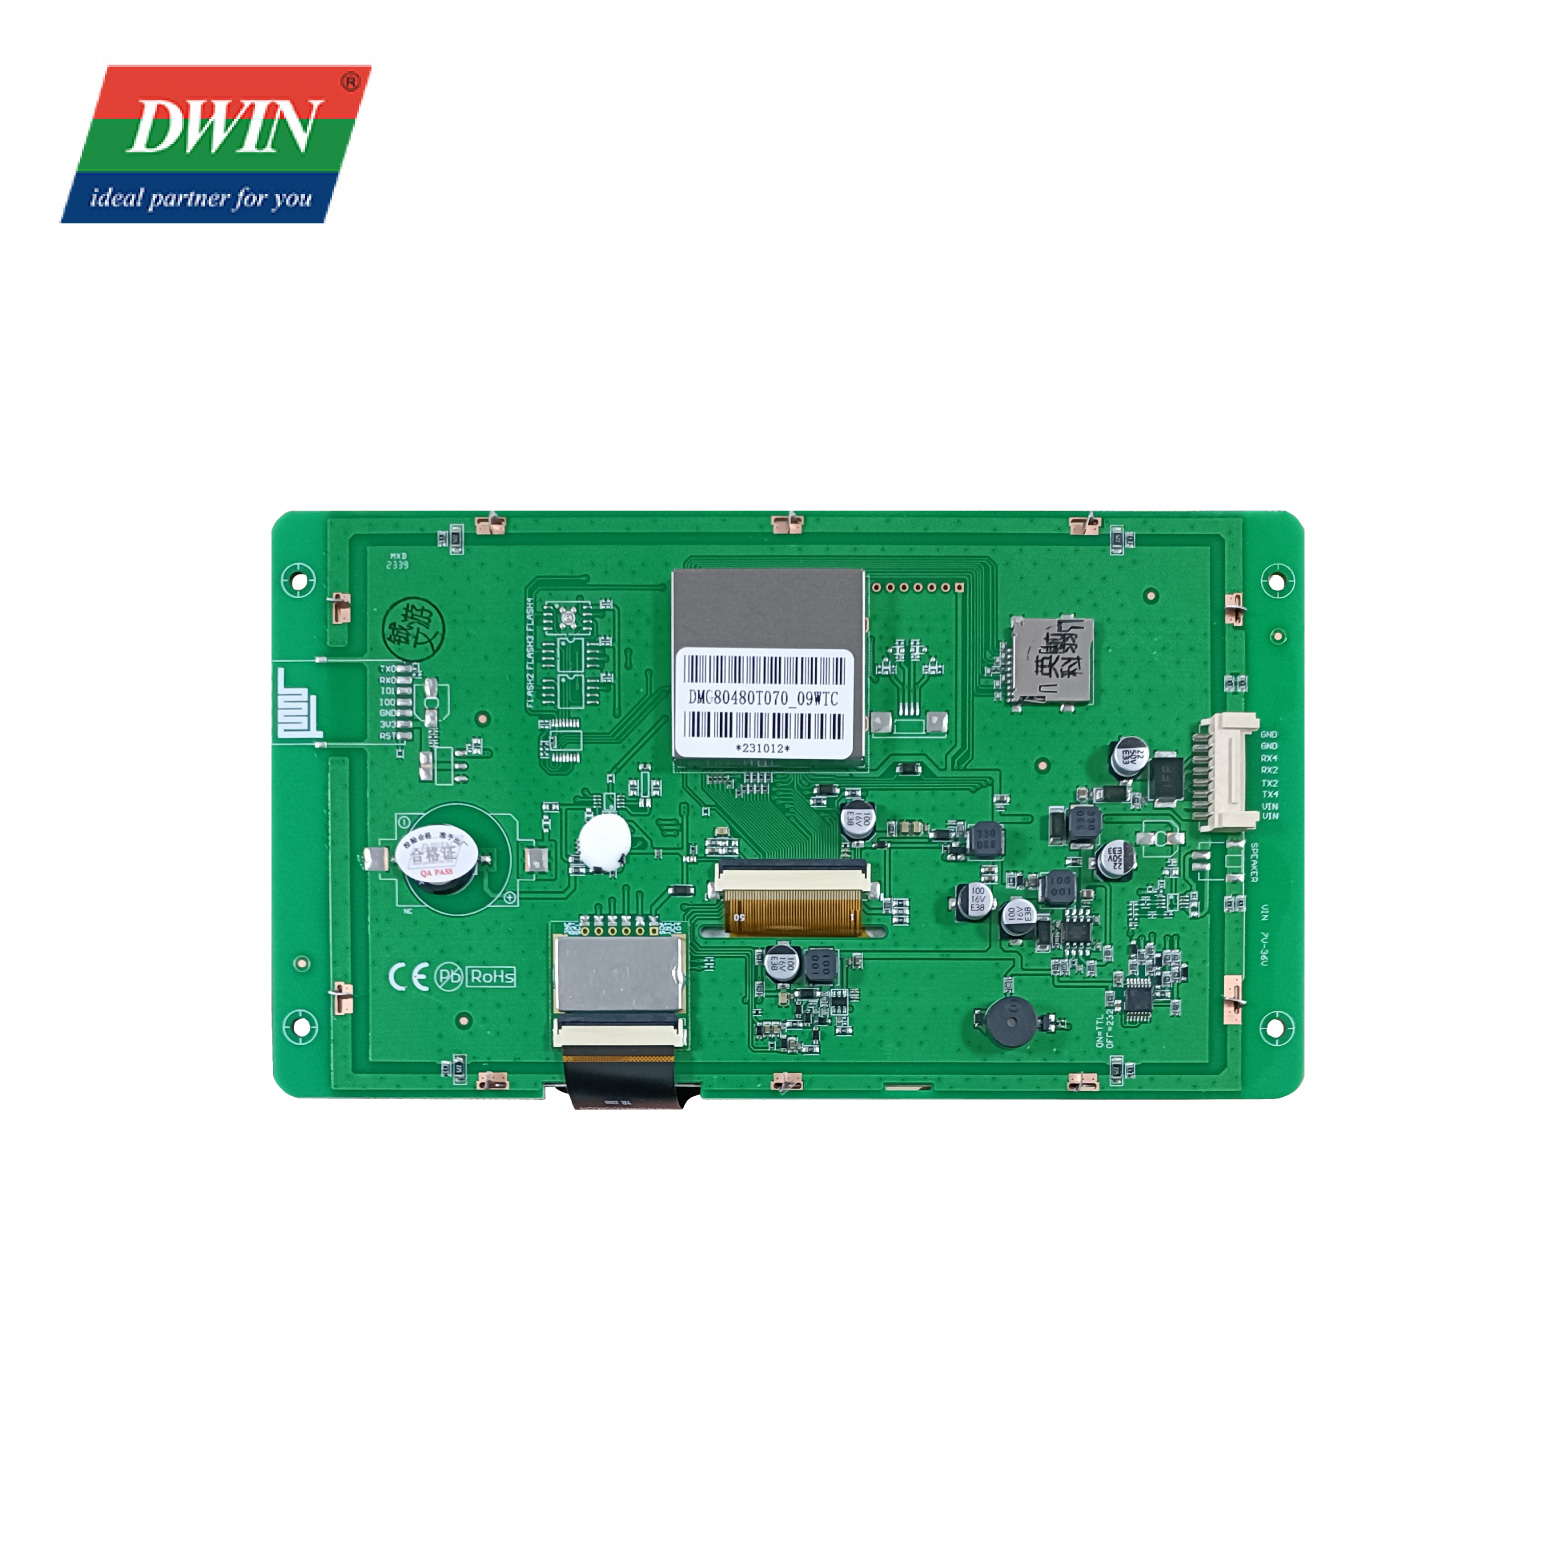 7.0 Inch Highlight TFT LCD Display DMG80480T070_09W (kelas Industri)